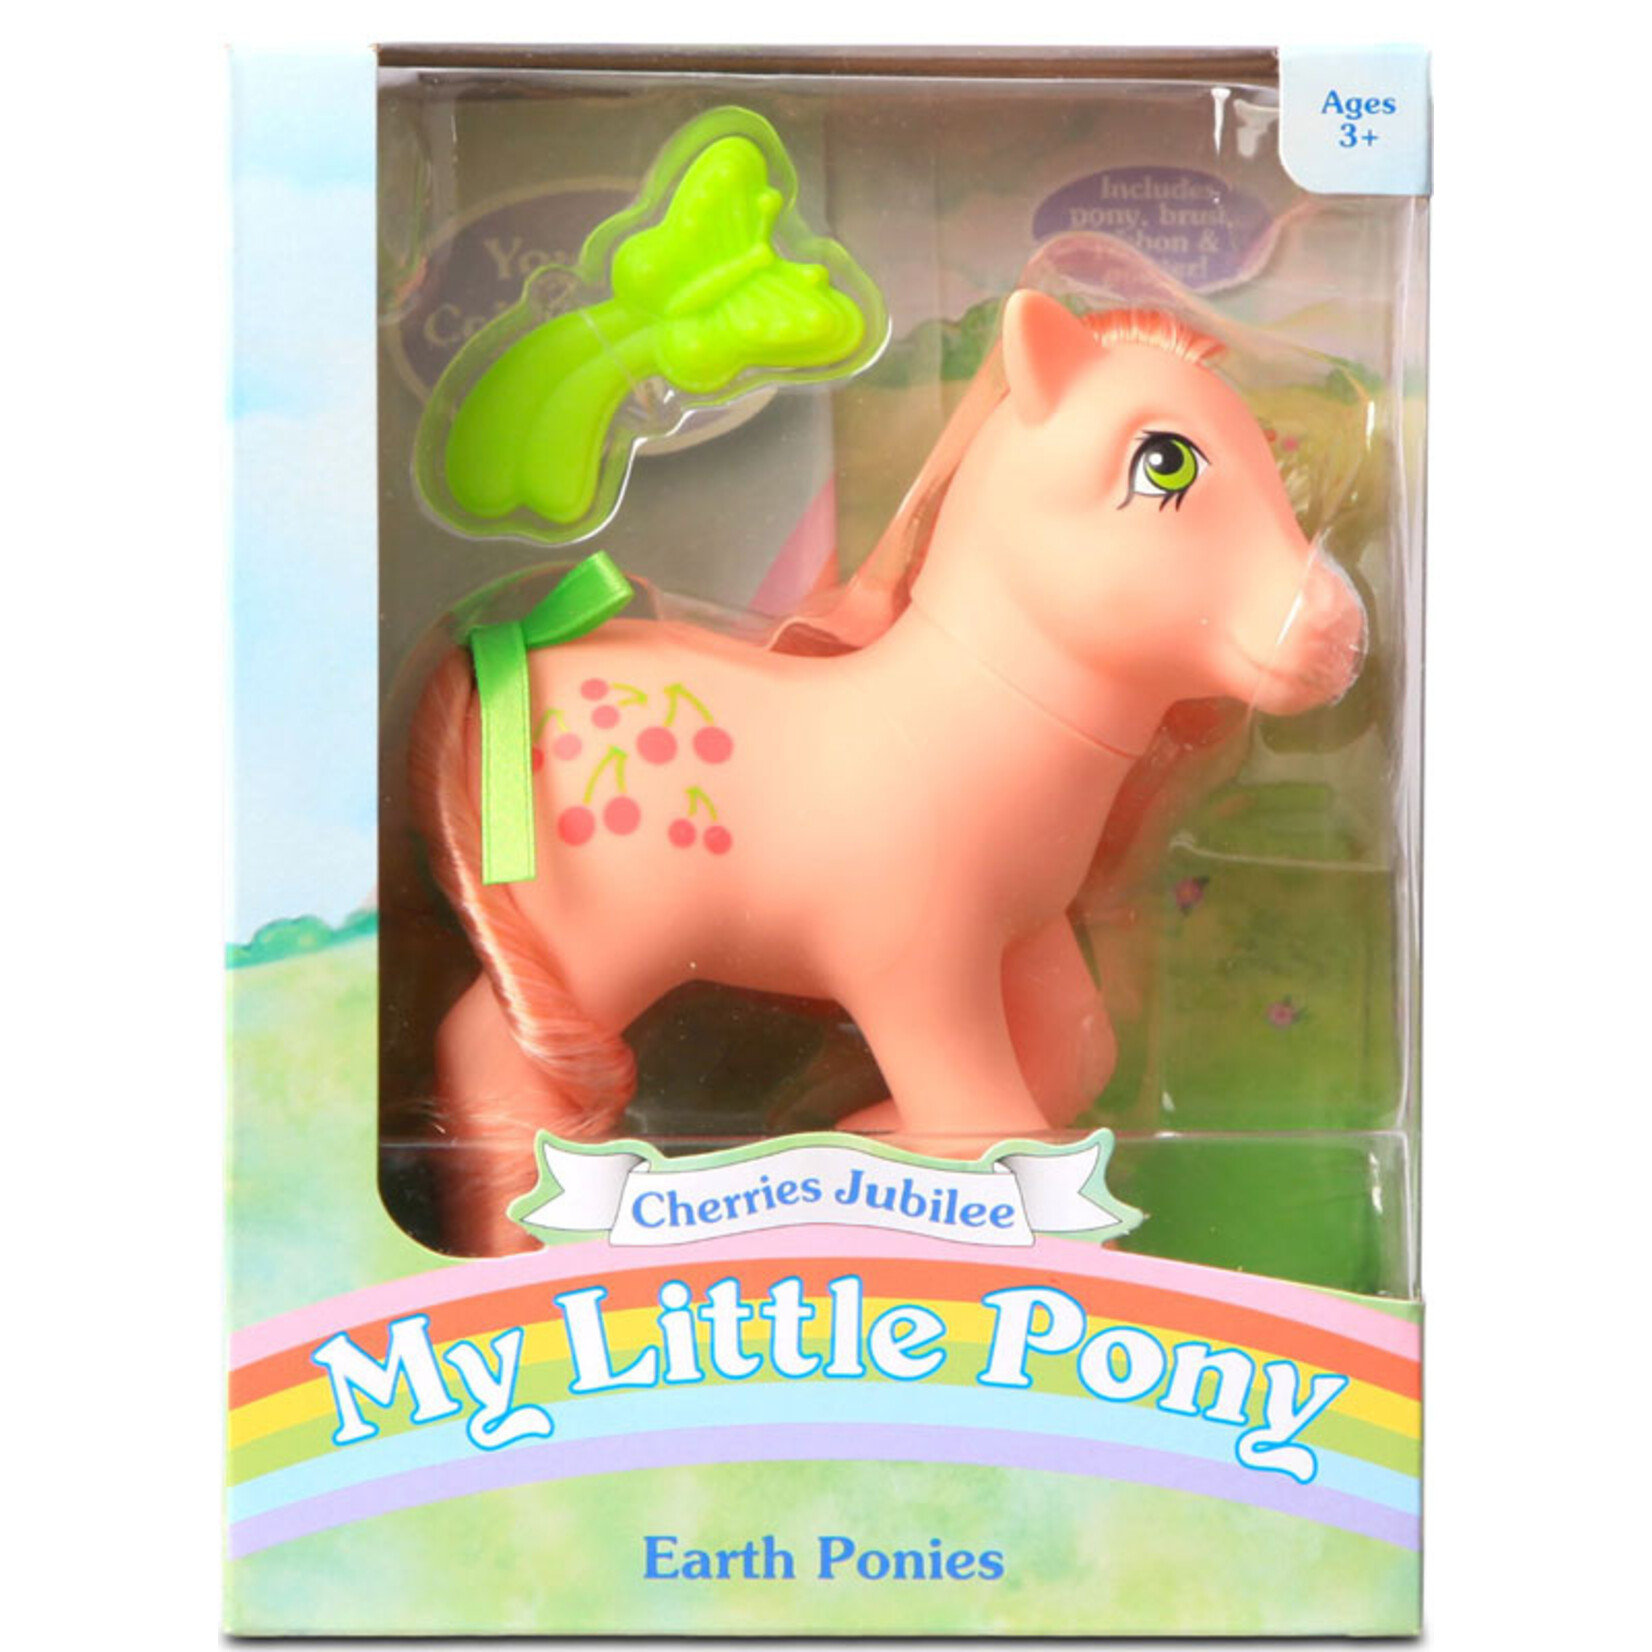 My Little Pony Classic Earth Ponies – Cherries Jubilee